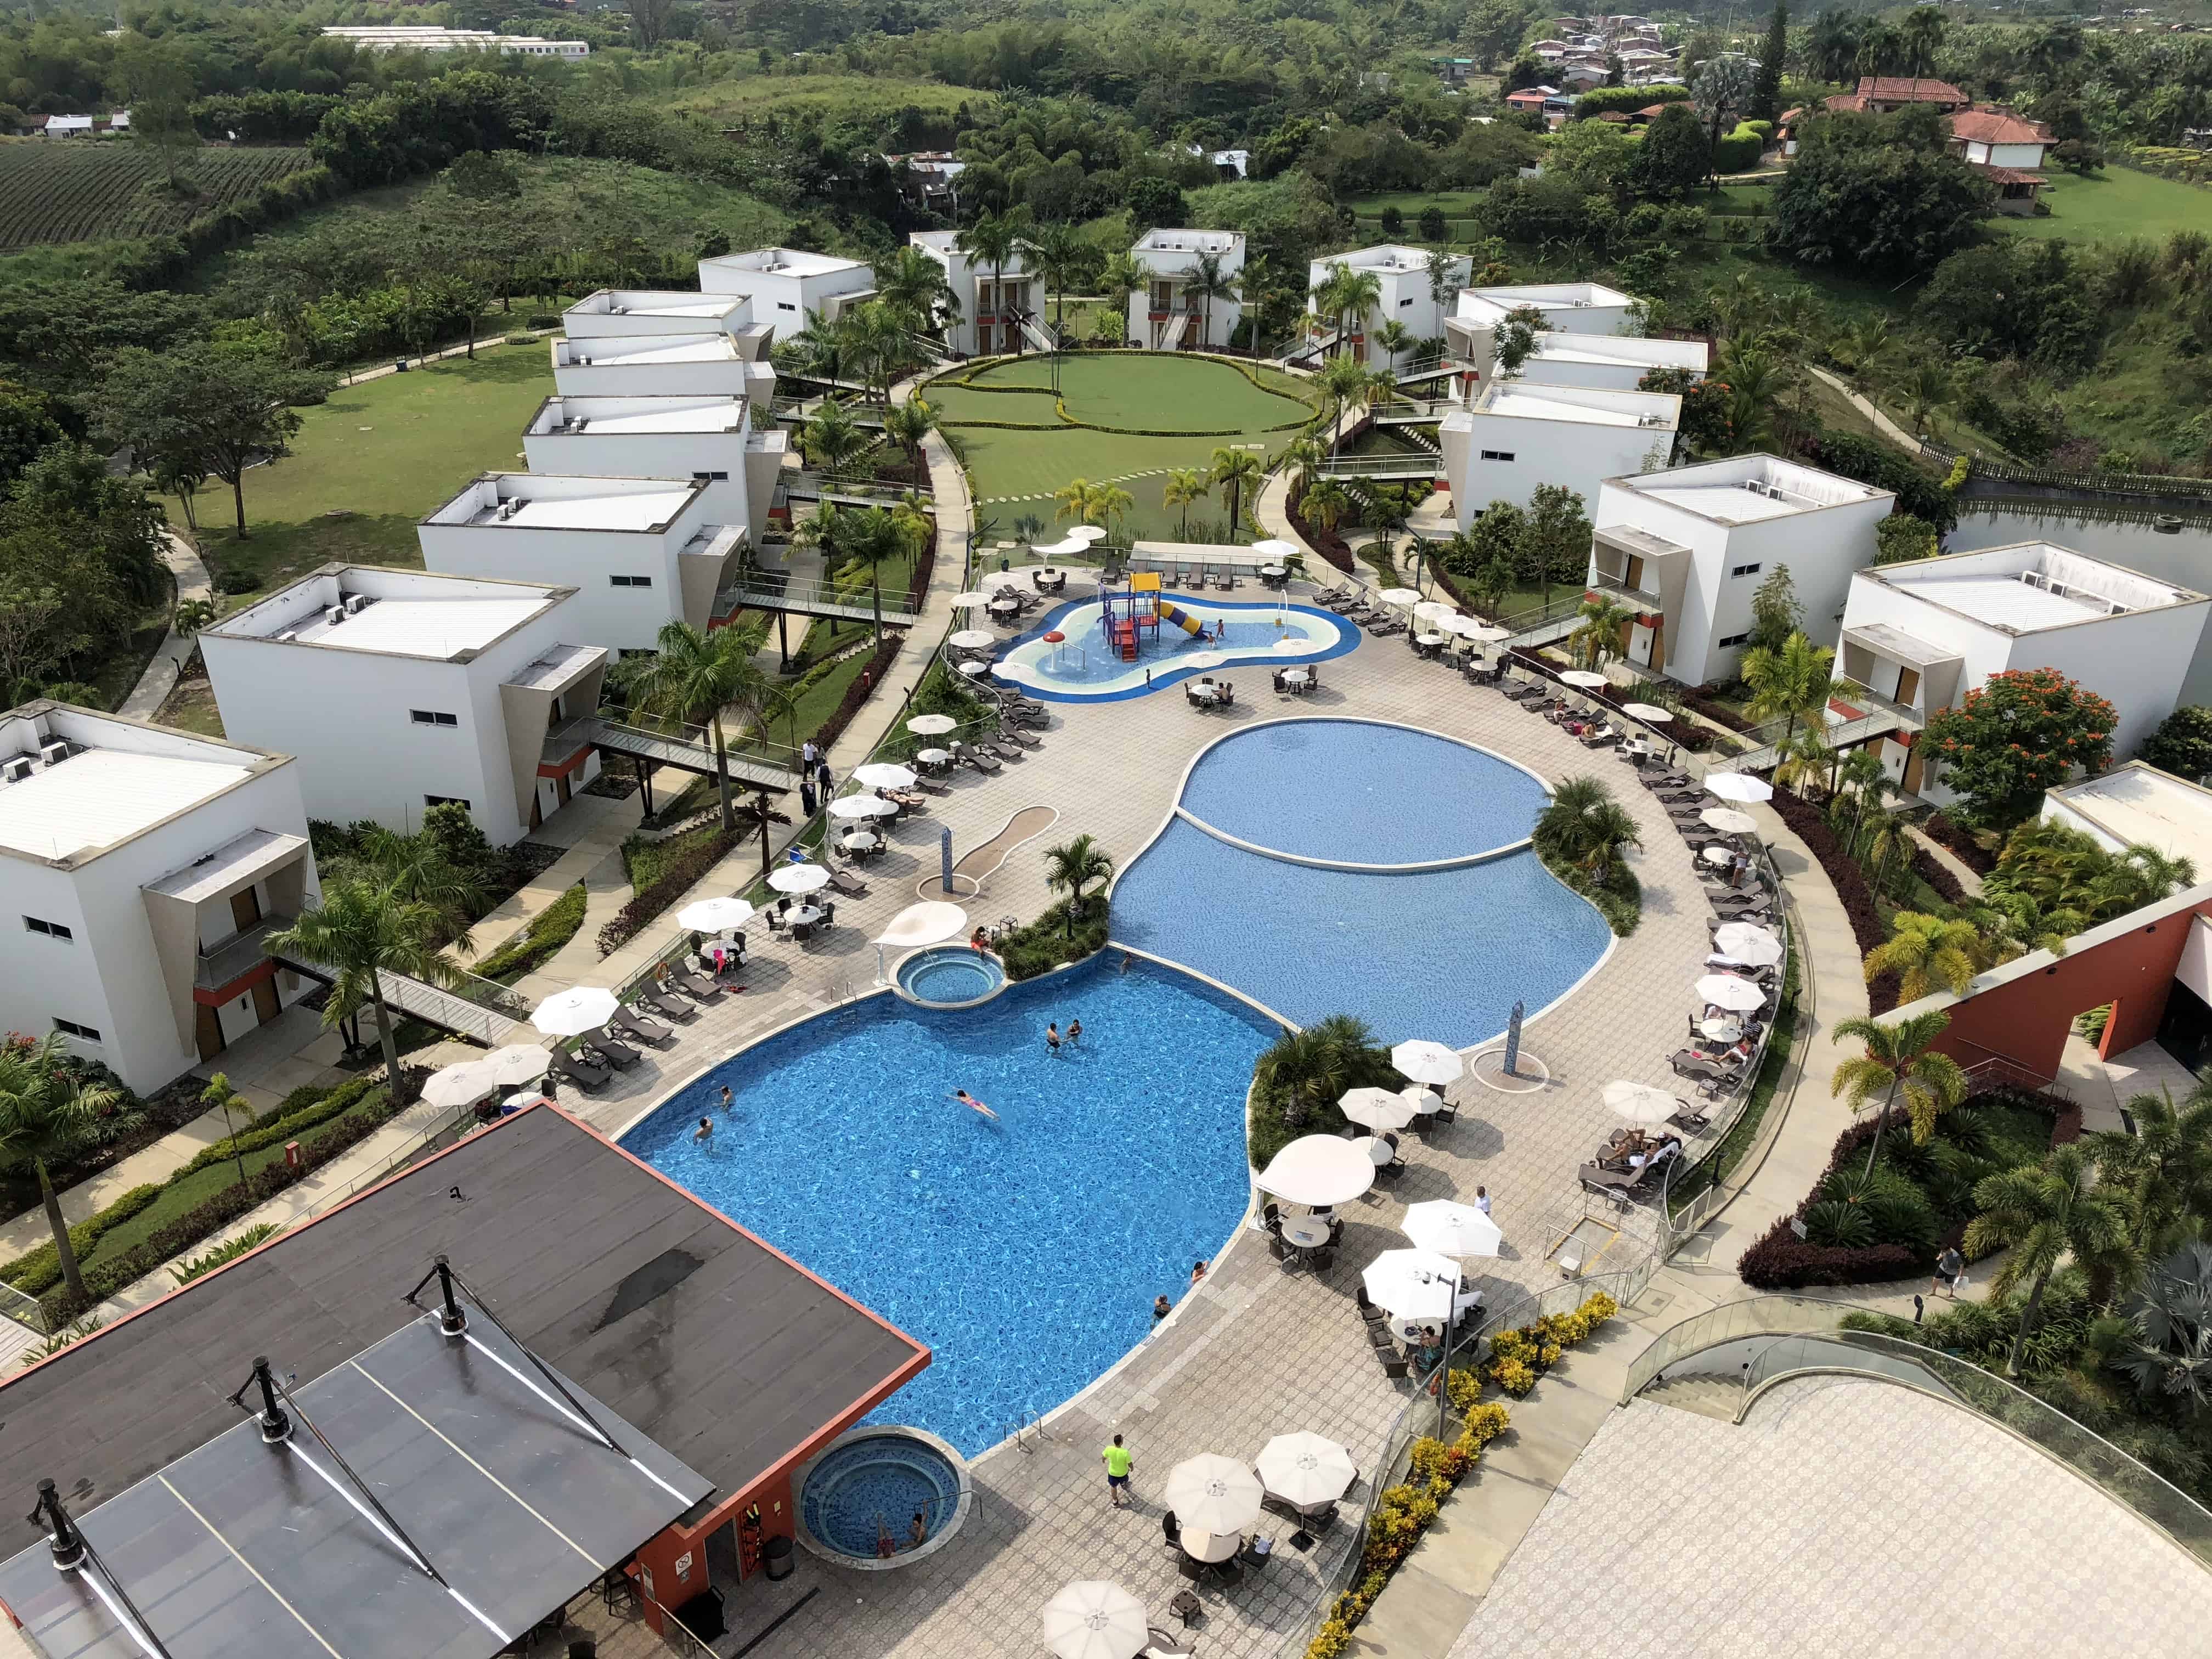 Pool area and villas at Sonesta Hotel Pereira, Colombia